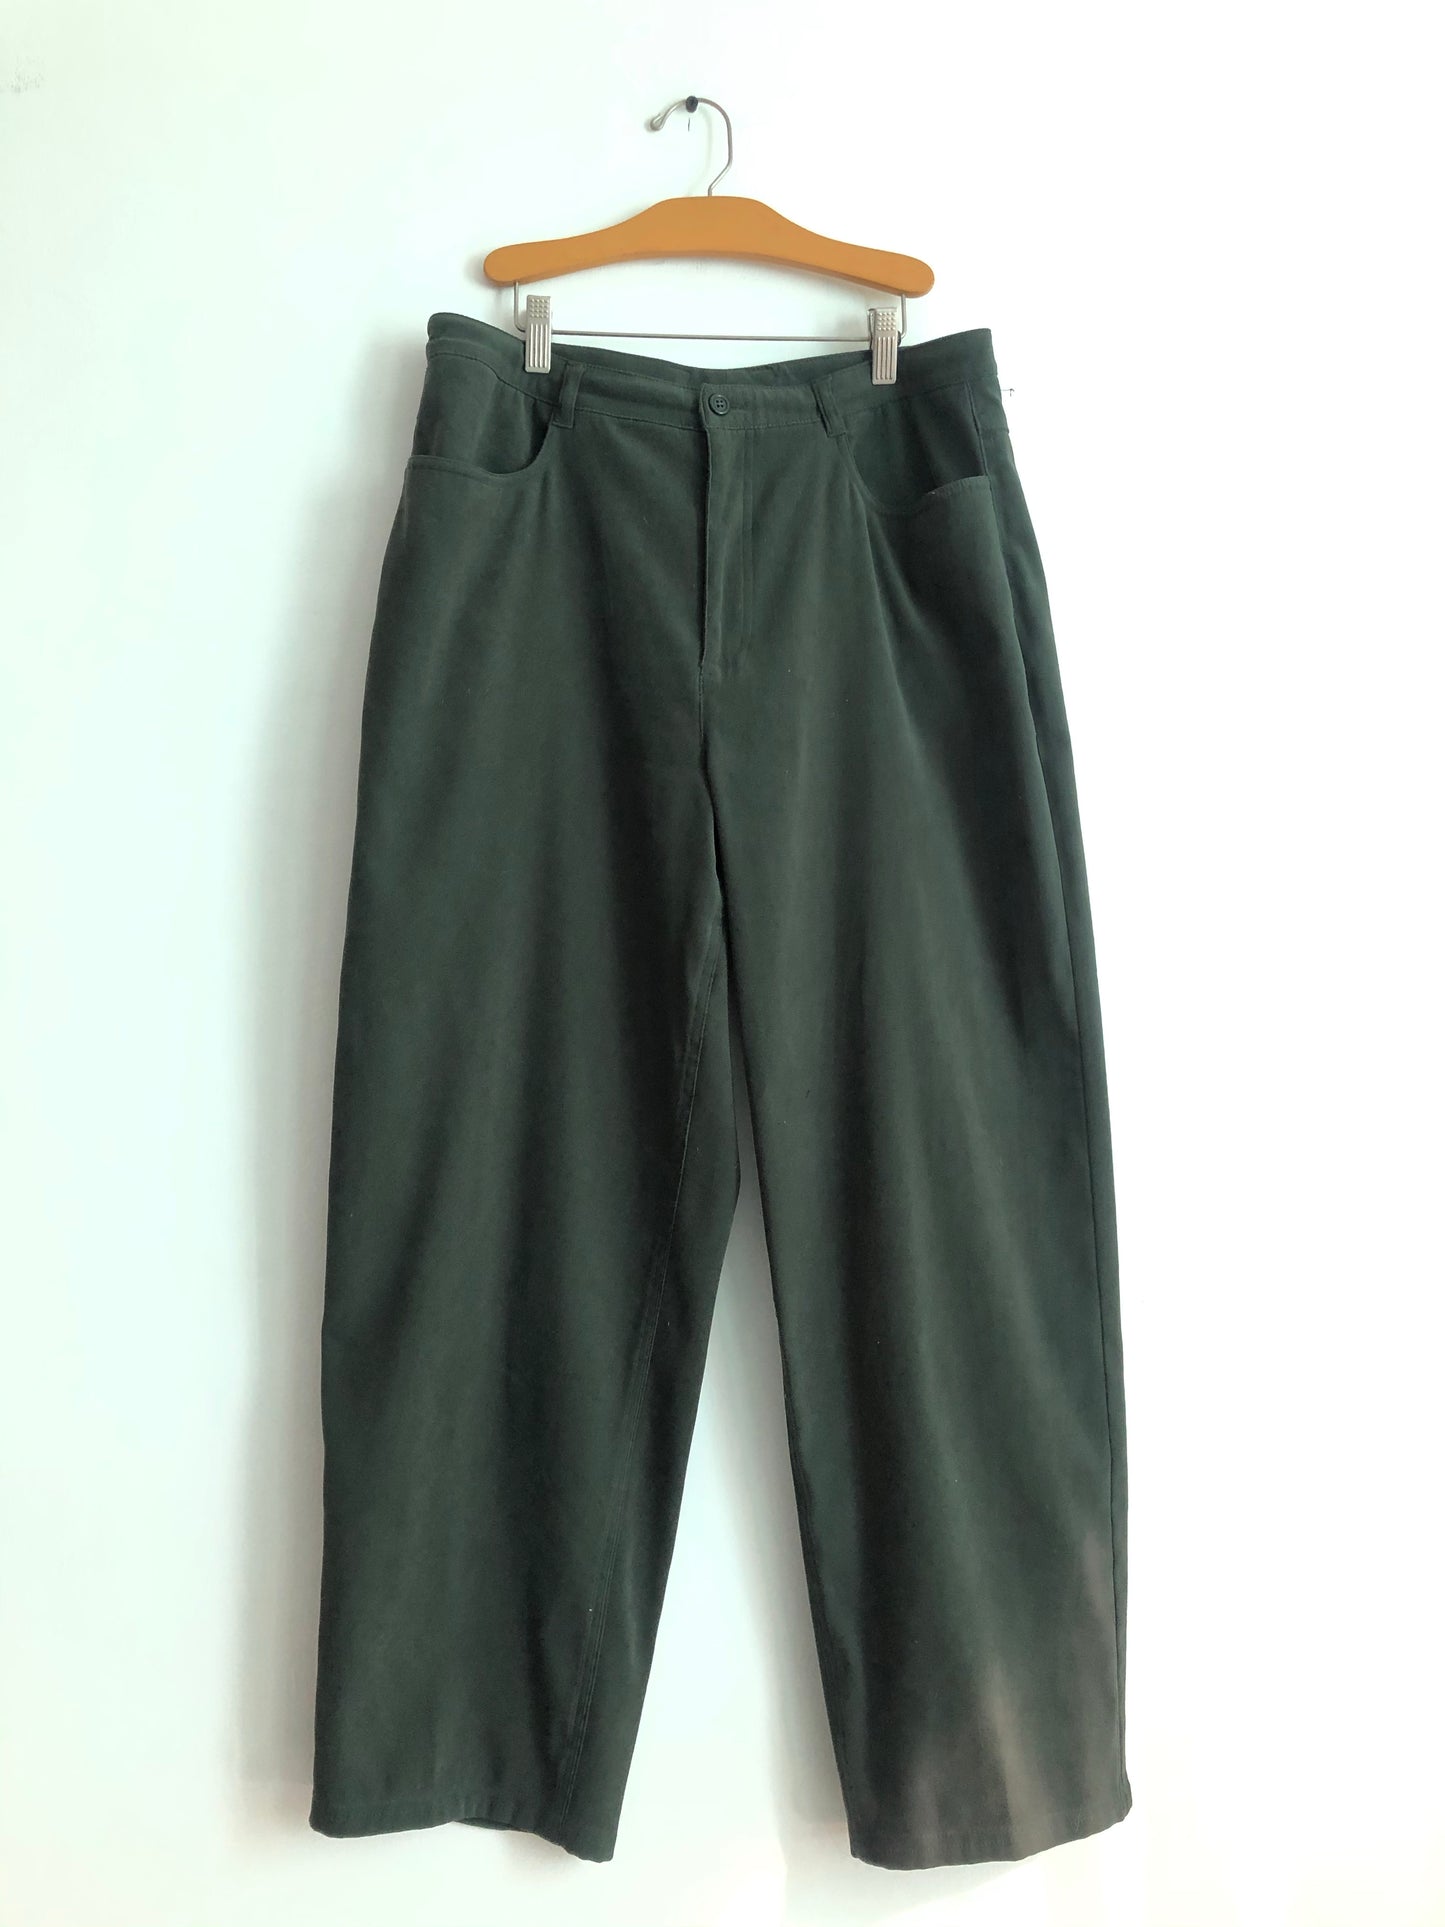 Olive Green Pants